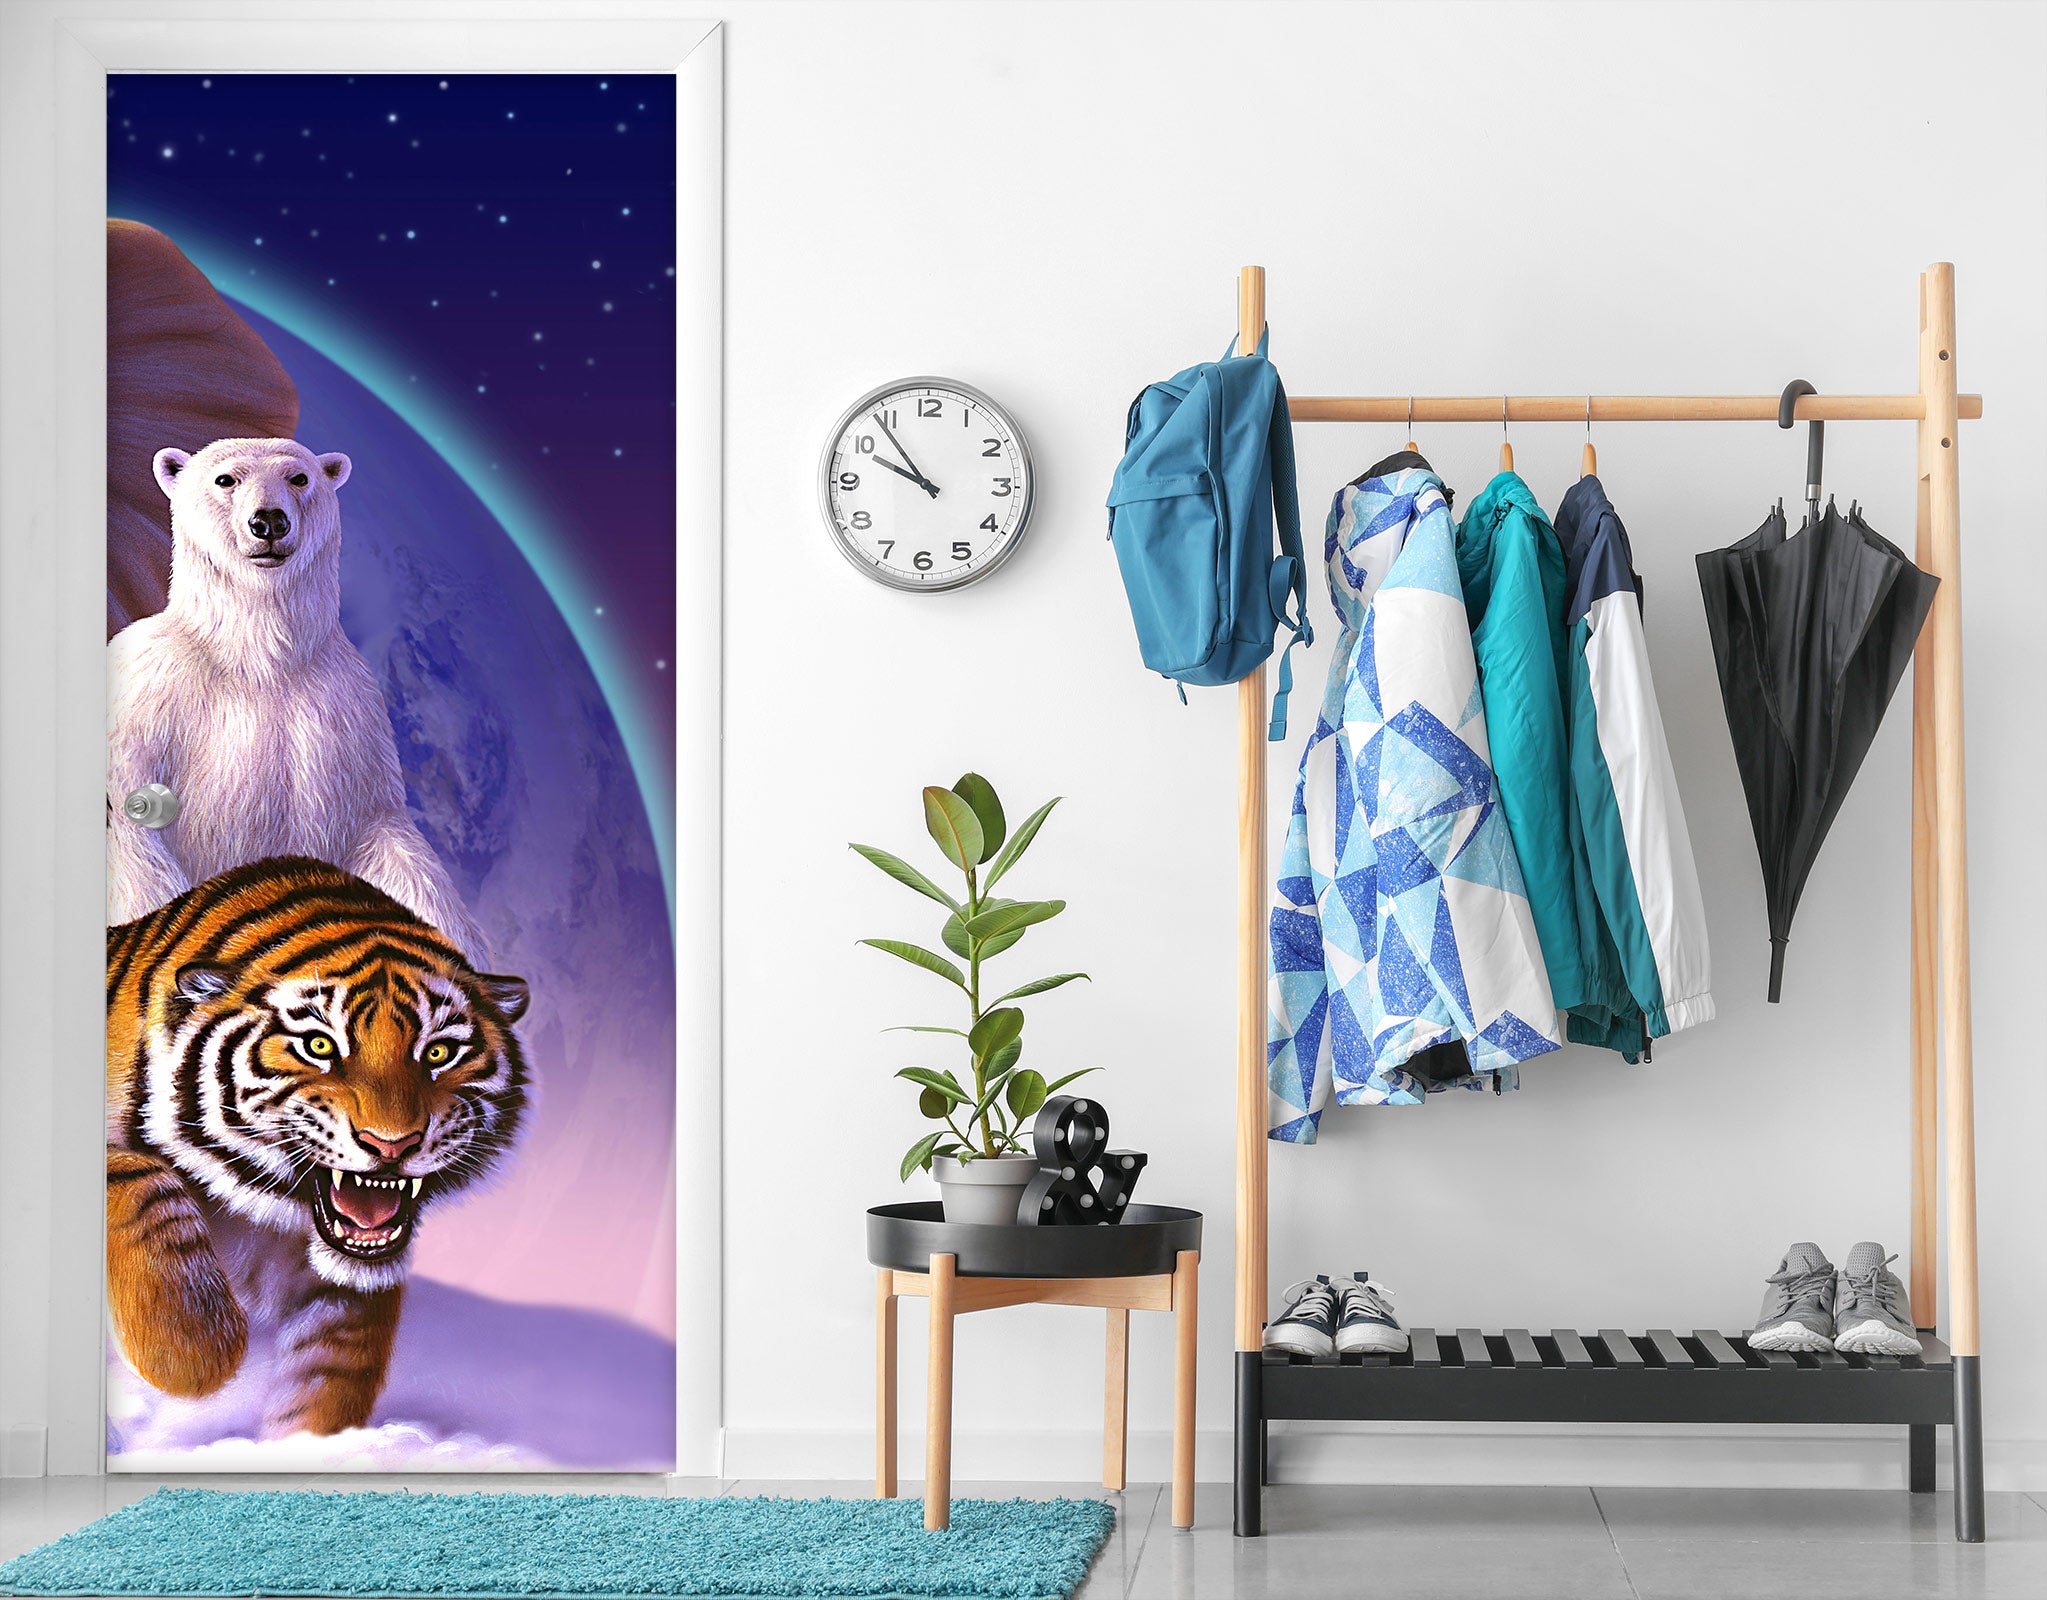 3D Polar Bear Tiger 112163 Jerry LoFaro Door Mural